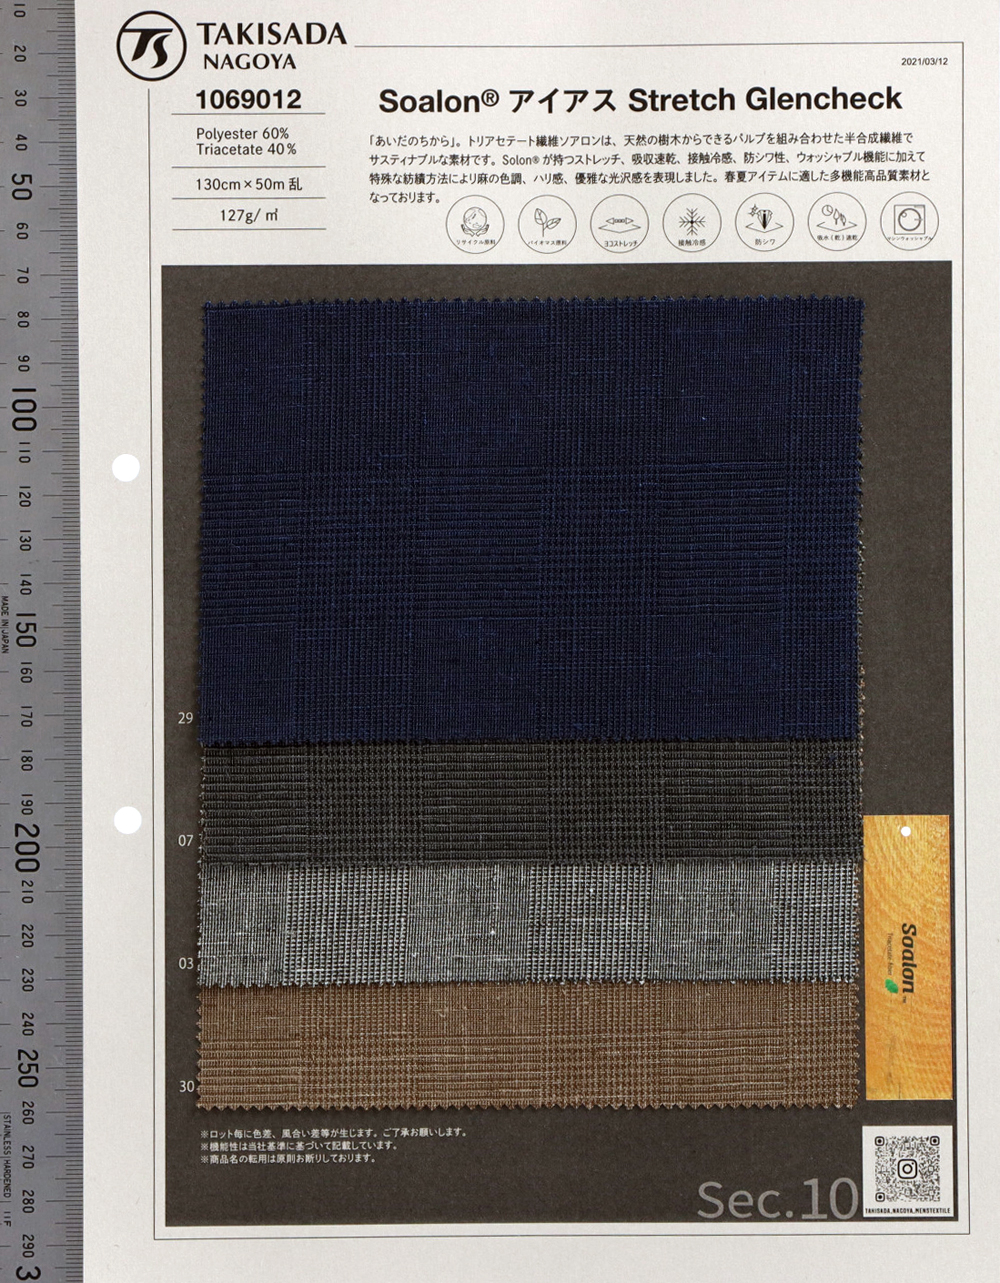 1069012 Soalon Triacétate Glen Check Stretch[Fabrication De Textile] Takisada Nagoya